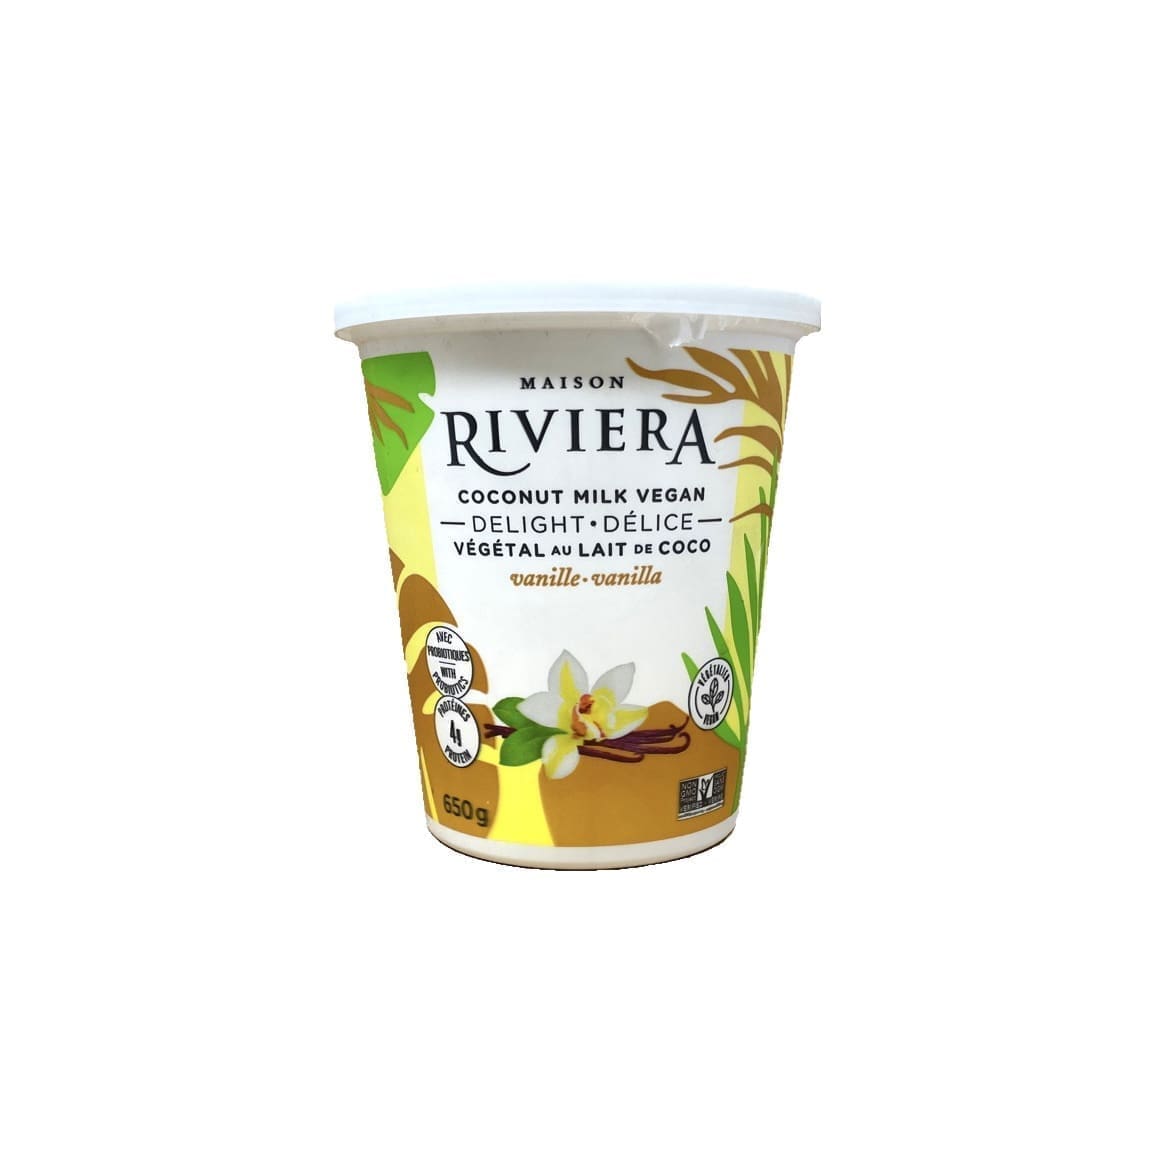 Maison Riviera Coconut Milk Vegan Delight Vanilla (650g)